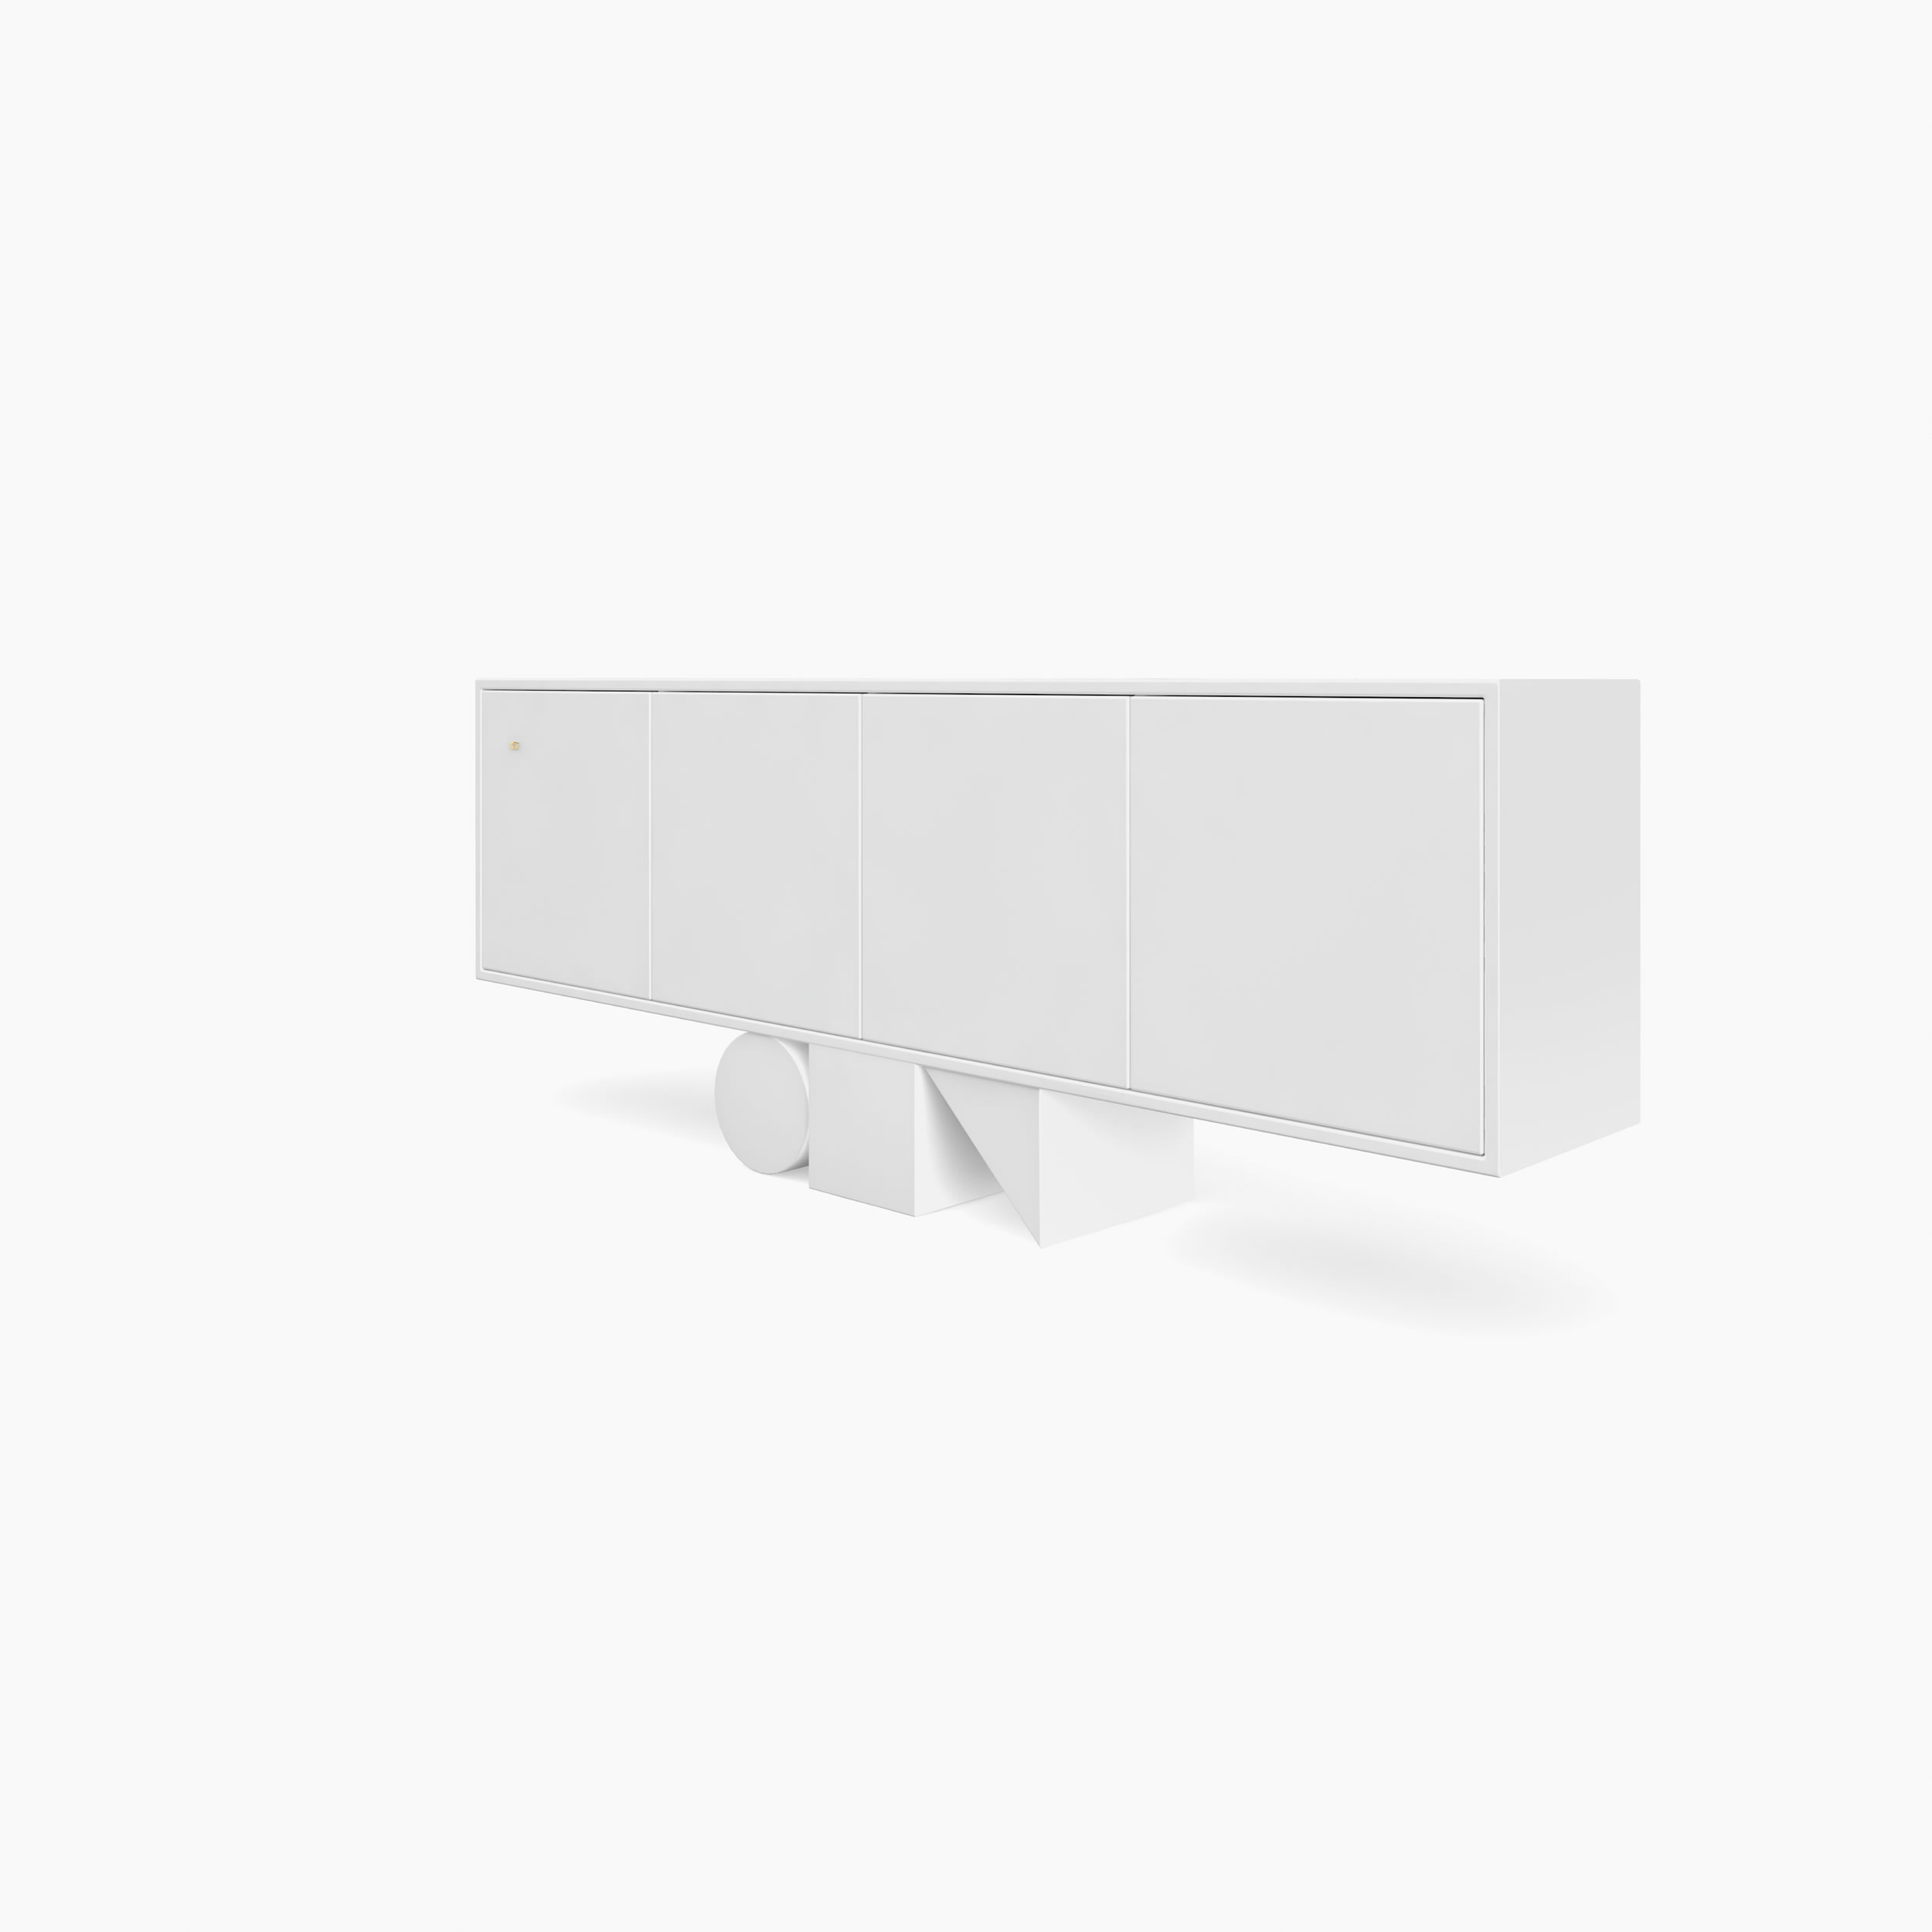 Sideboard wuerfel prisma zylinder weiss decorativearts Buero inspire me homedecor Sideboards FS 151 A FELIX SCHWAKE